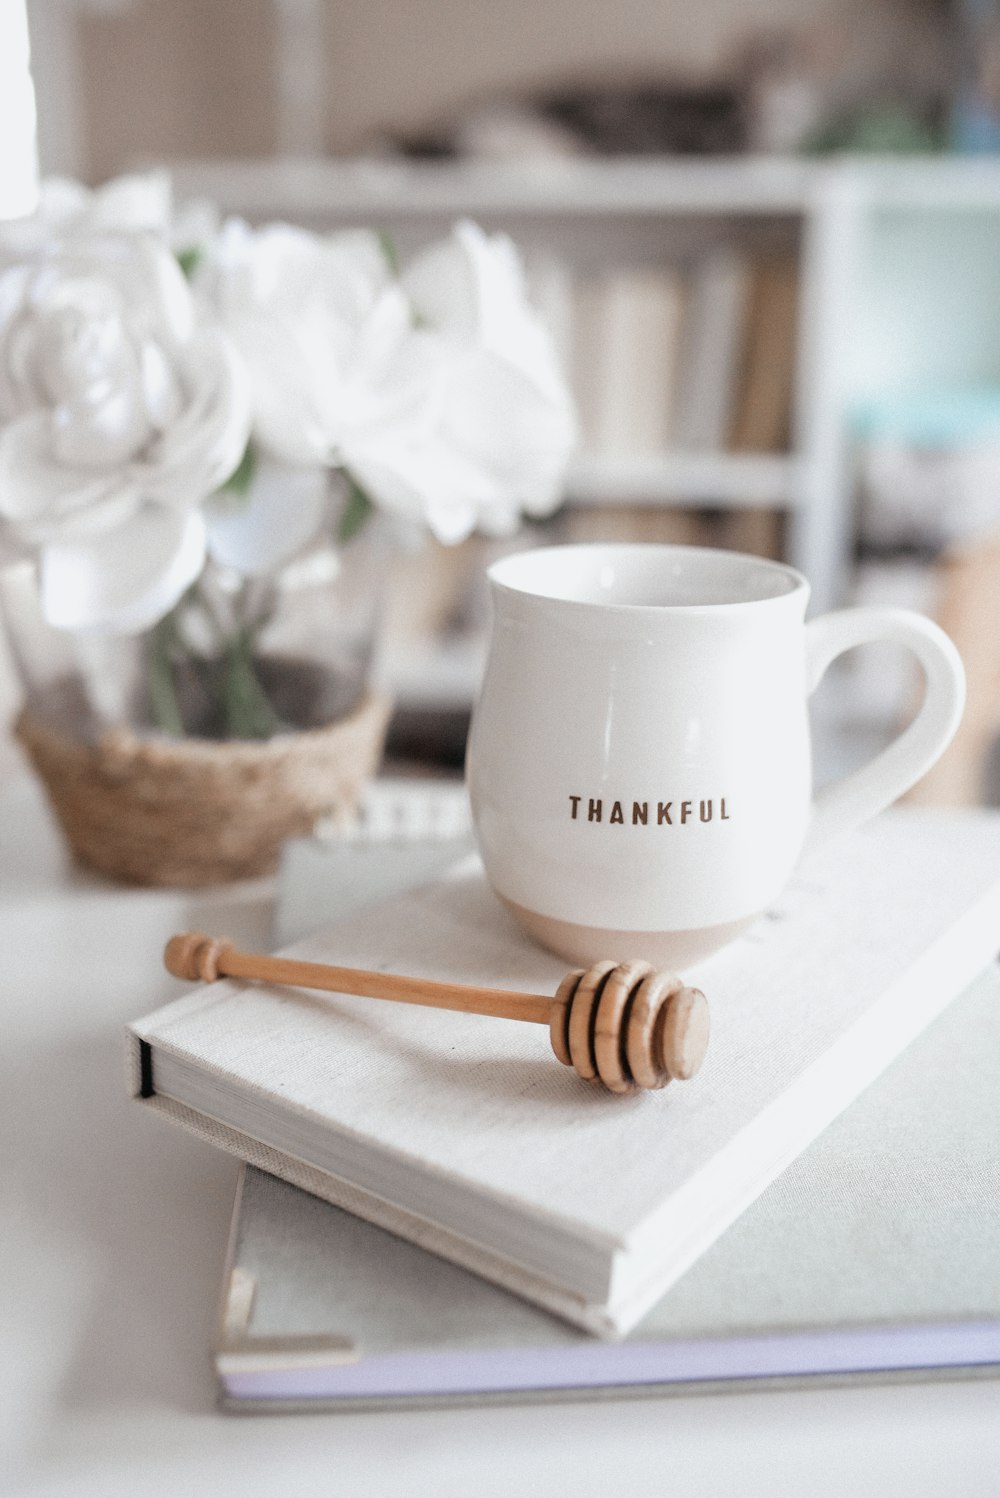 white ceramic mug beside brown wooden spoon